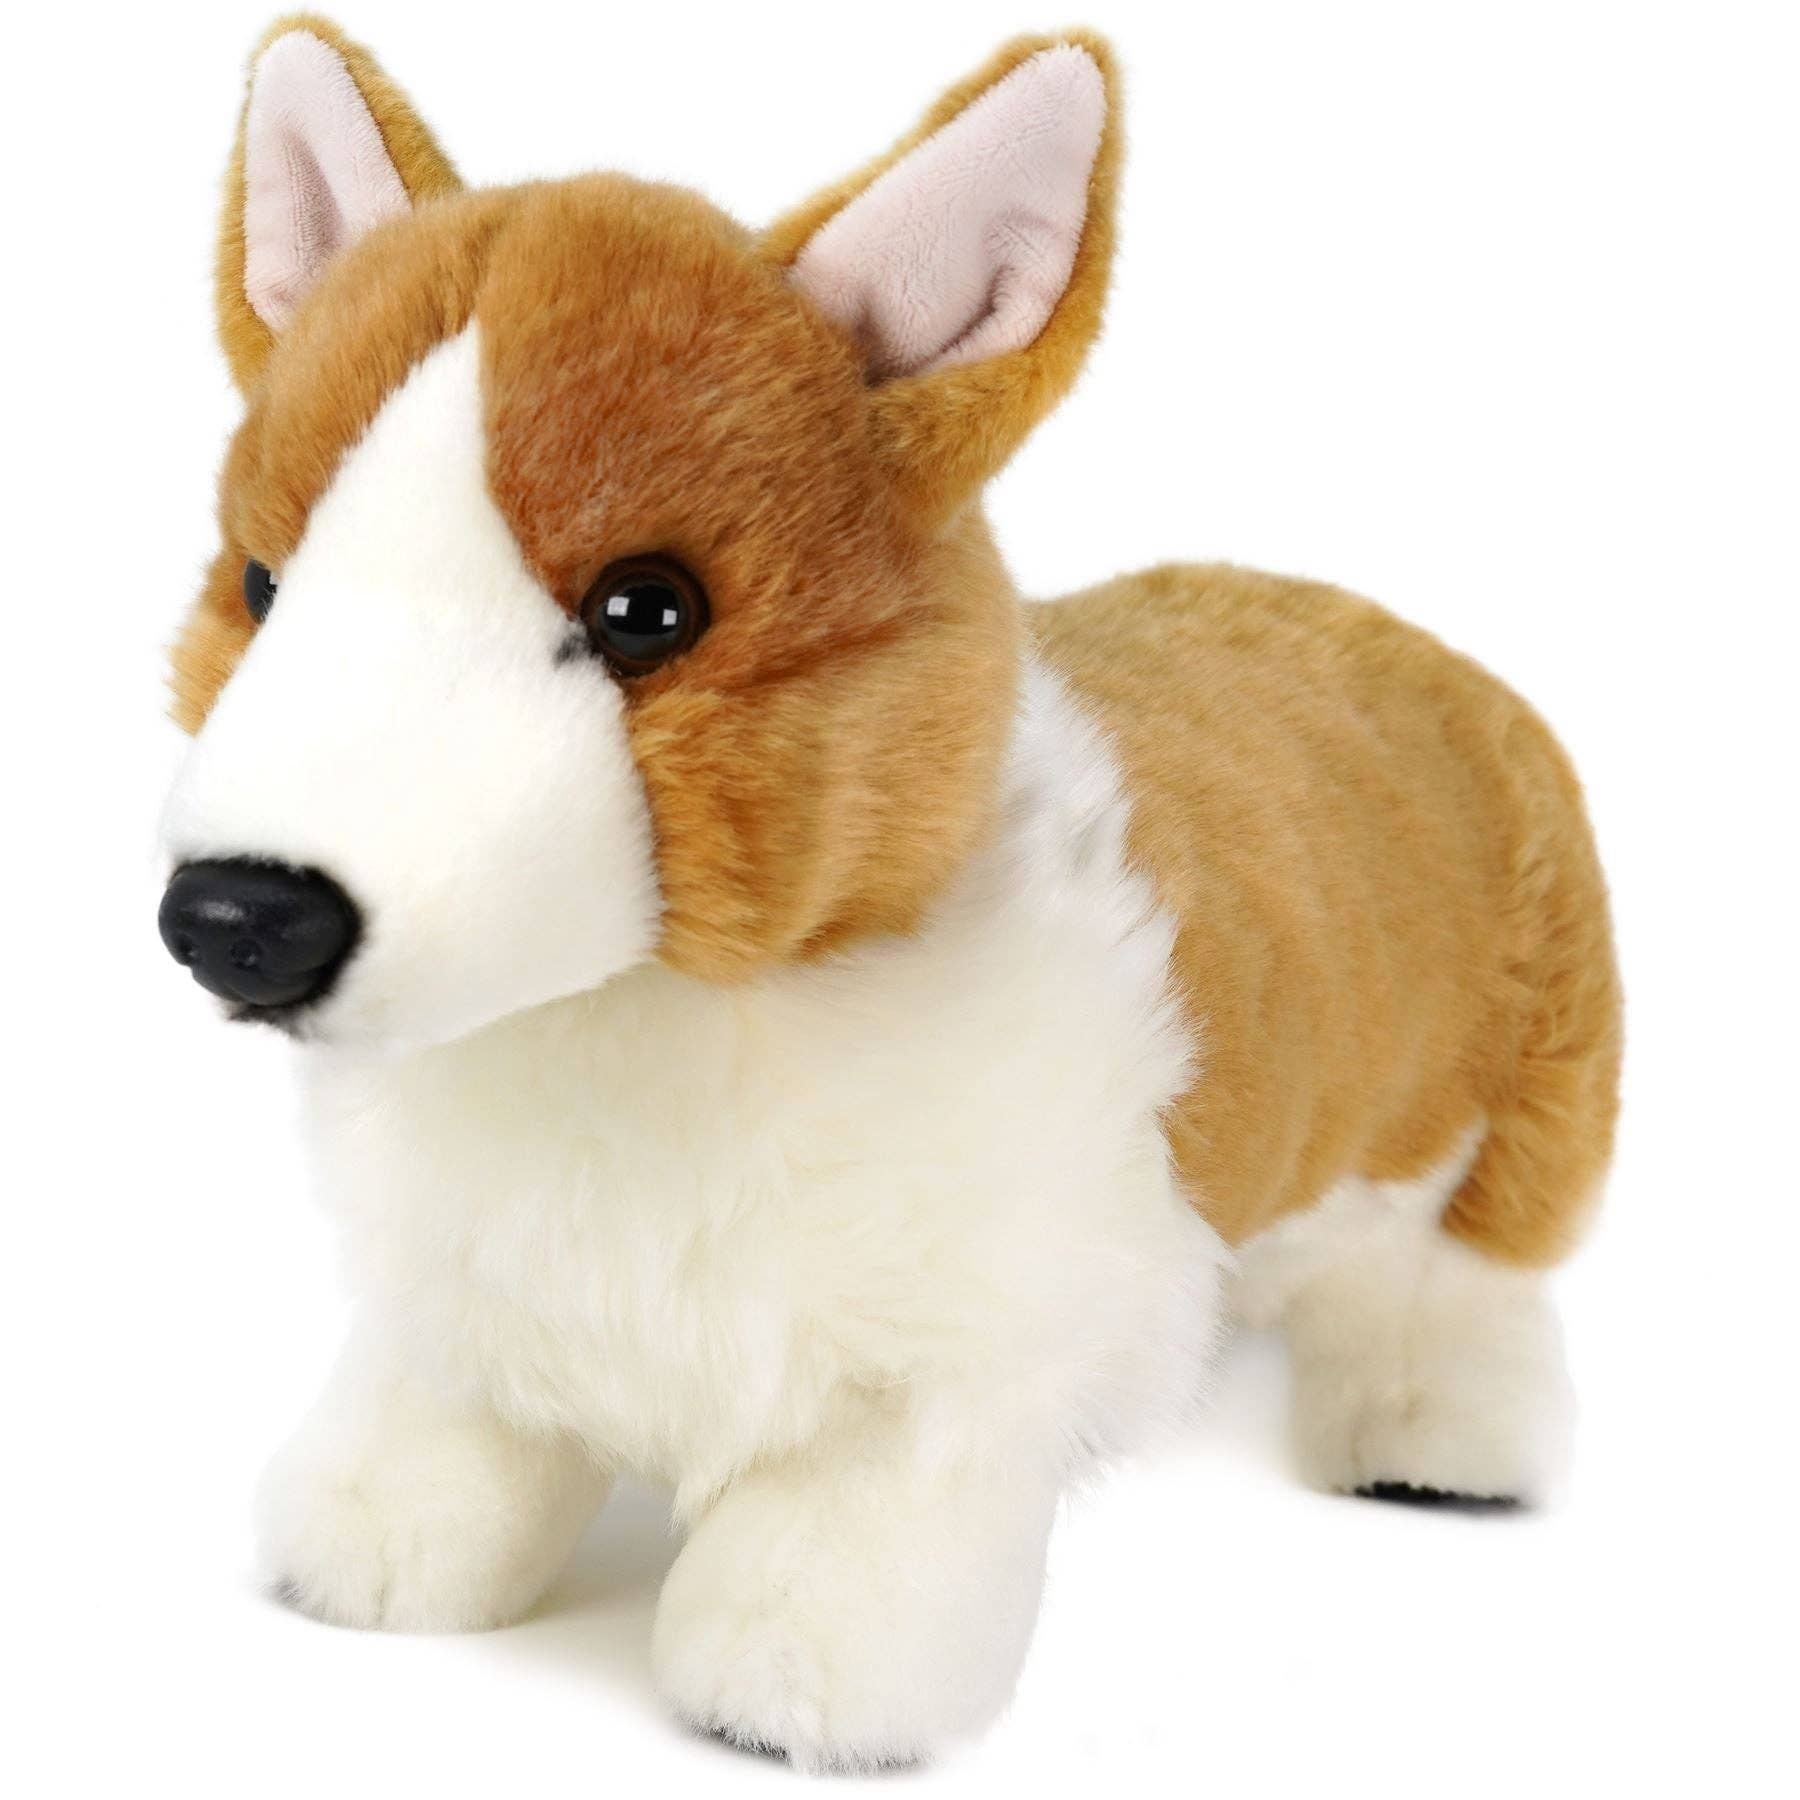 VIAHART Burkham The Beagle - 14 Inch Stuffed Animal Plush - by Tiger Tale  Toys